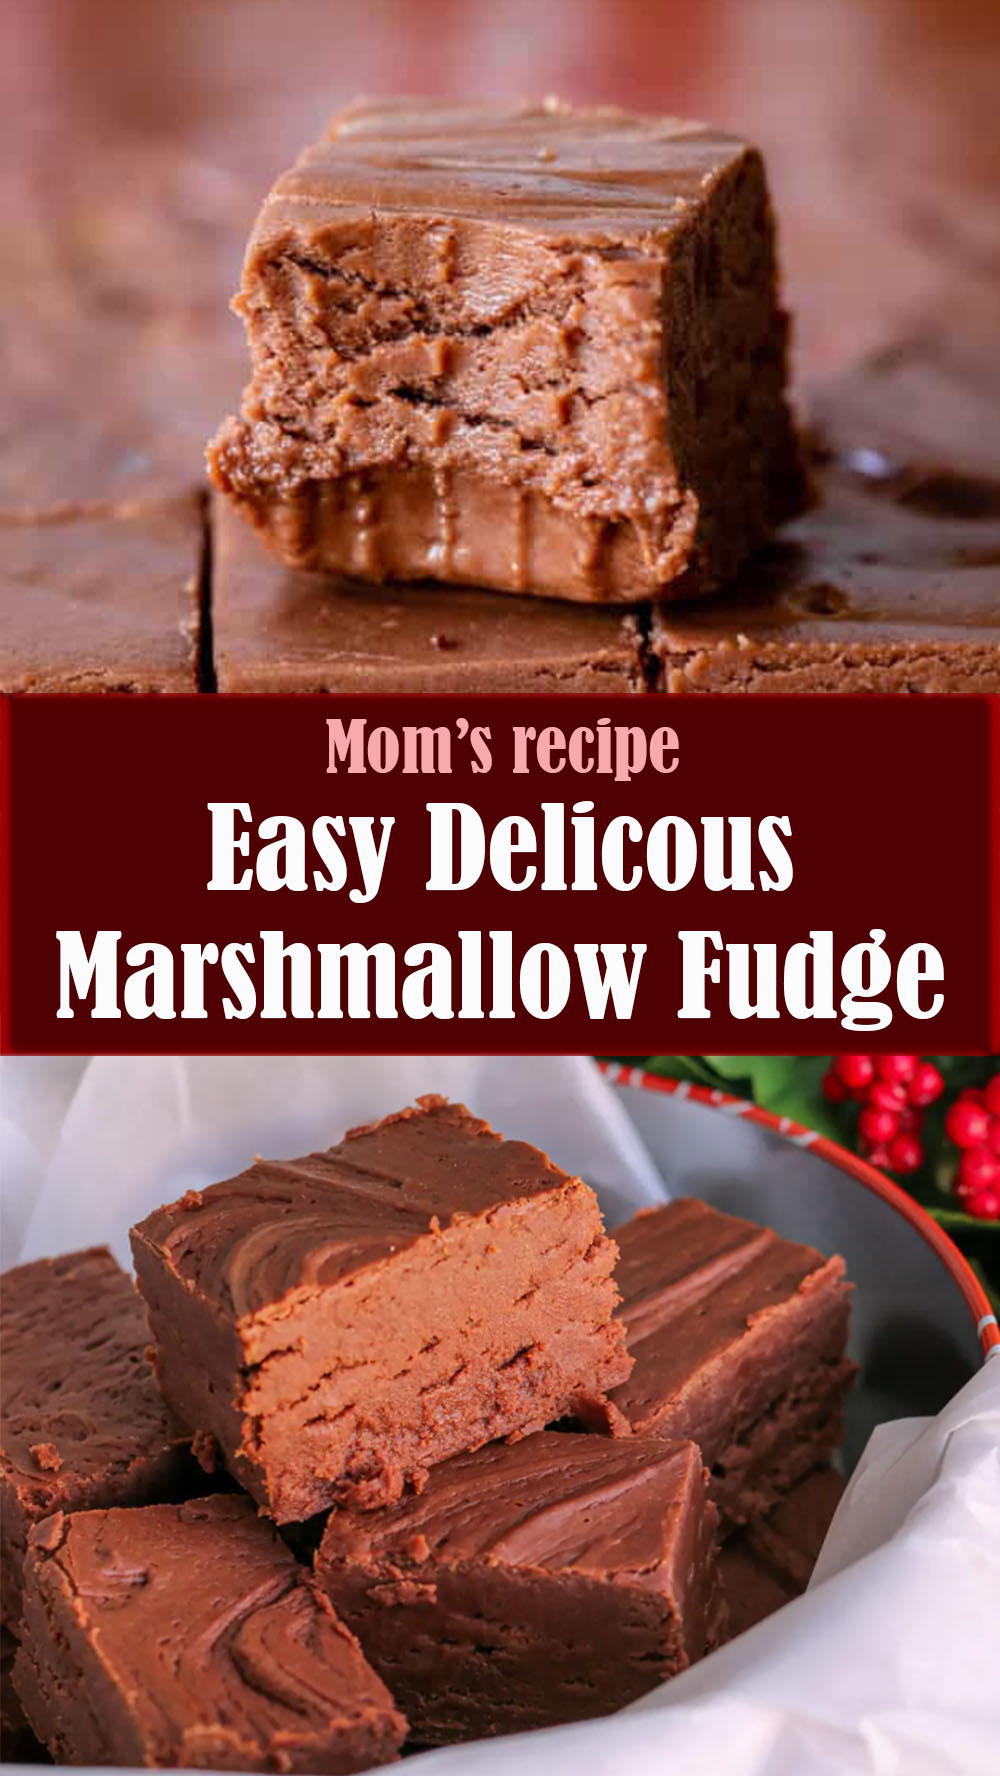 Easy Delicous Marshmallow Fudge